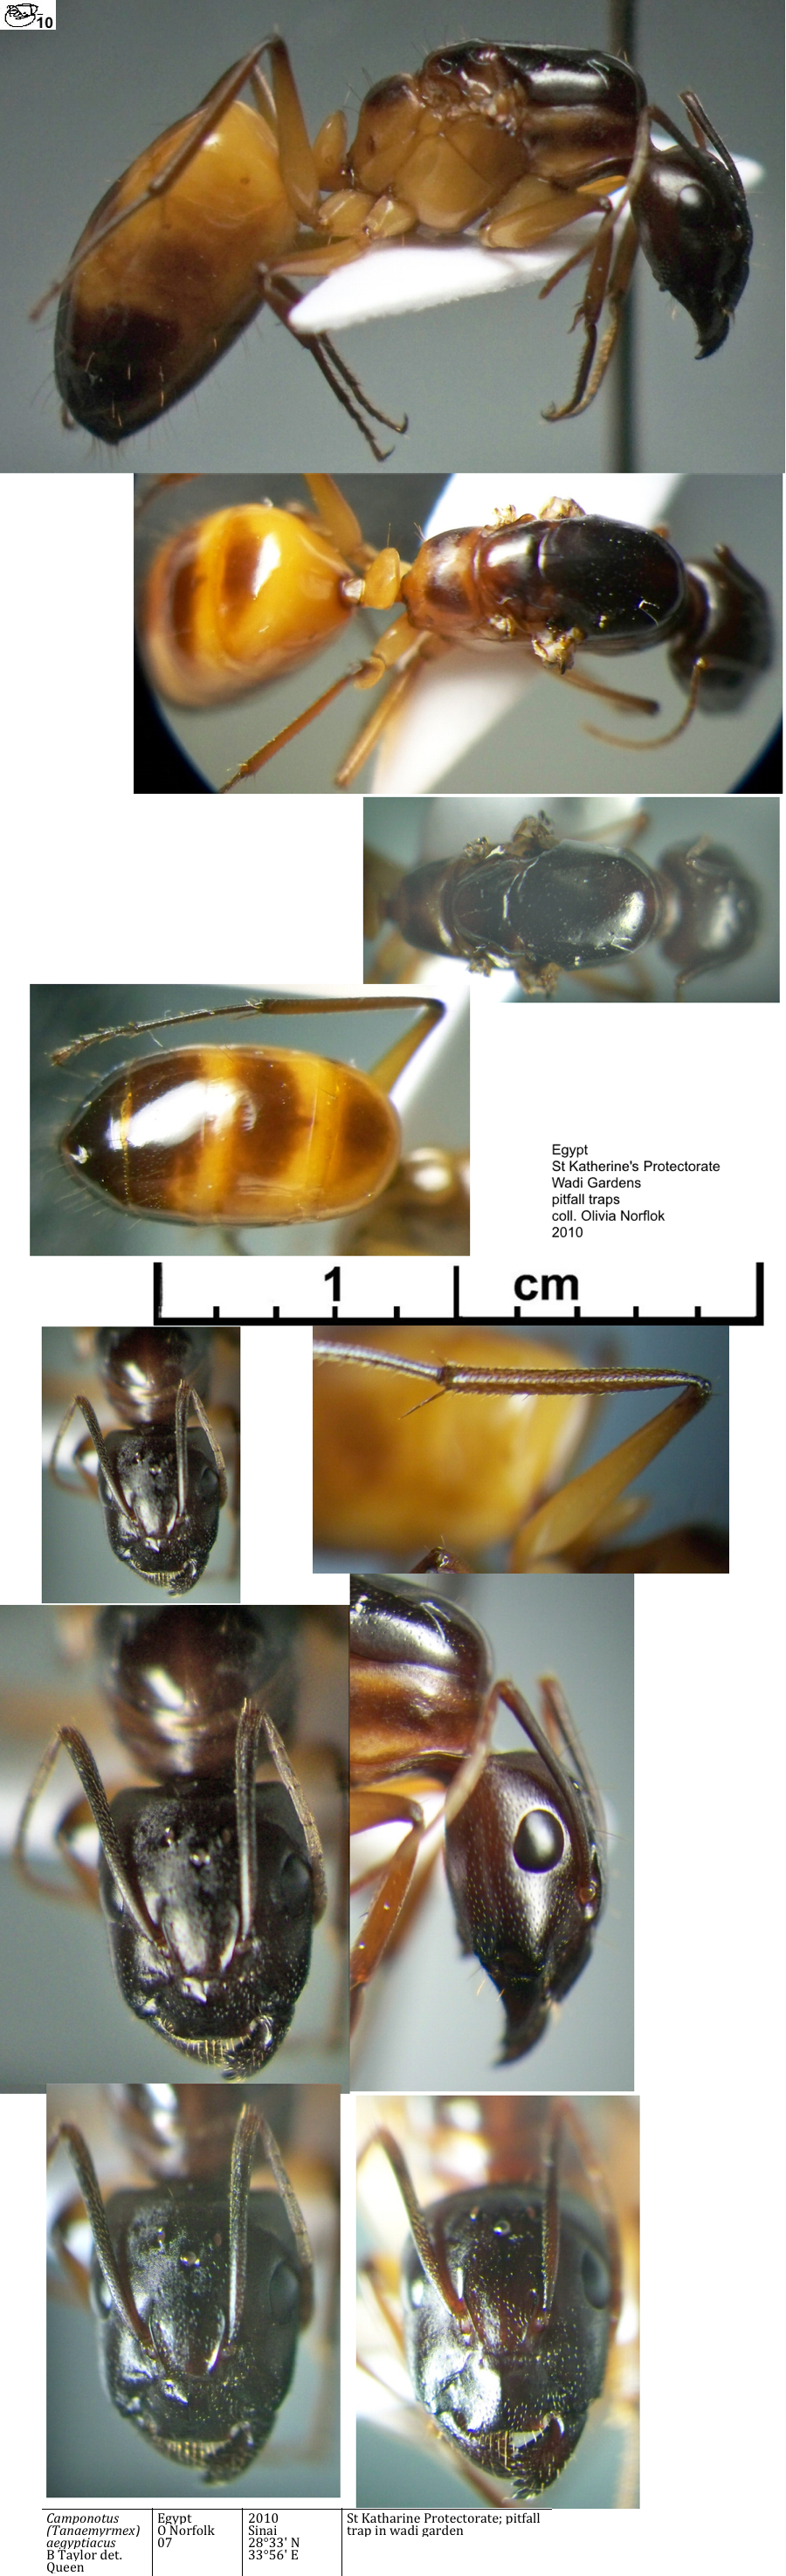 {Camponotus aegyptiacus media & minima}